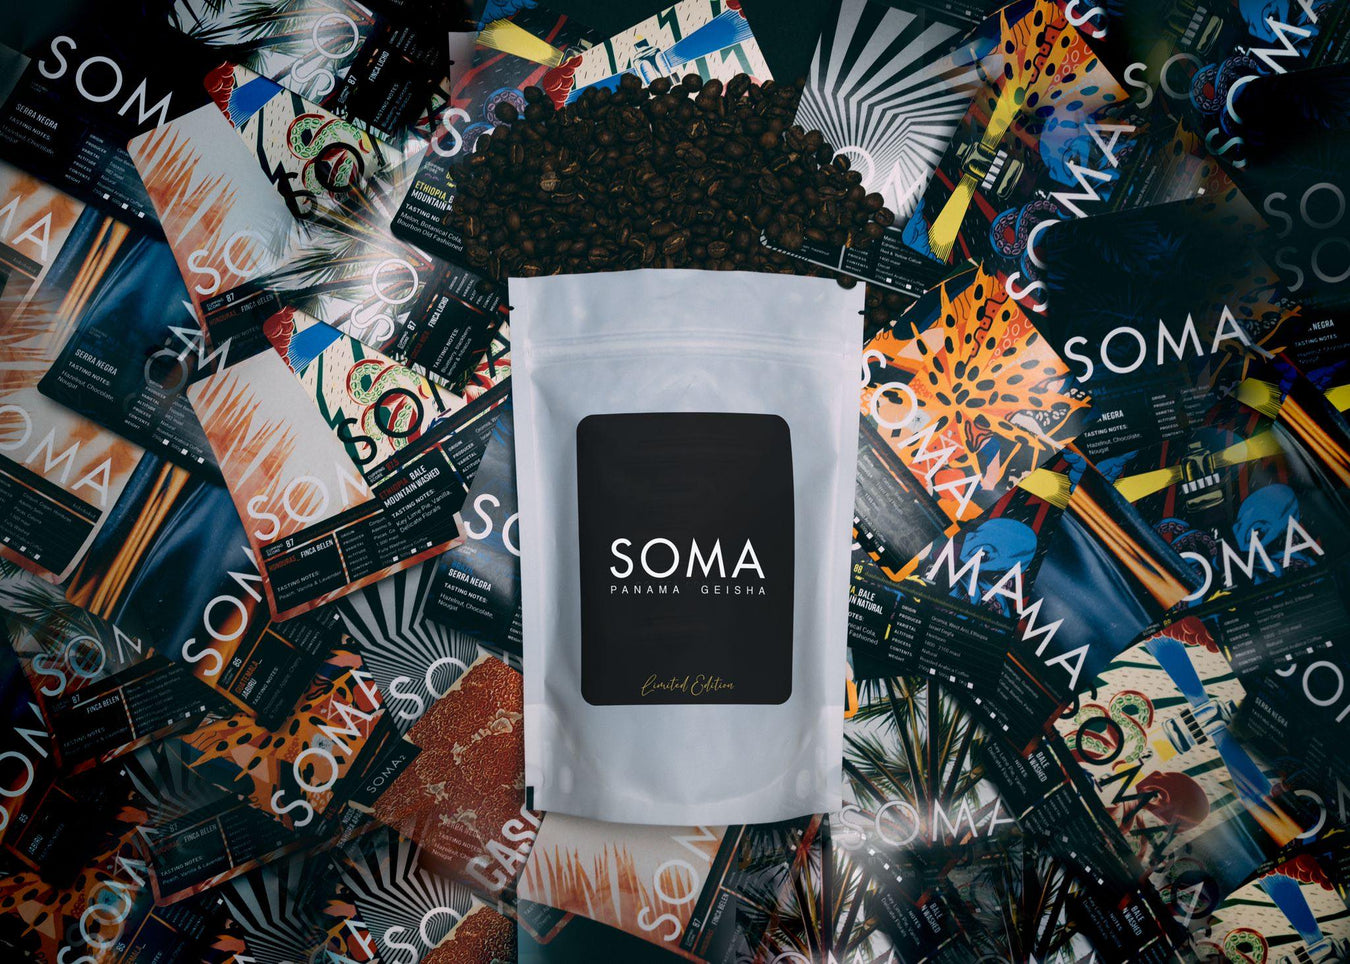 Soma Coffee Company